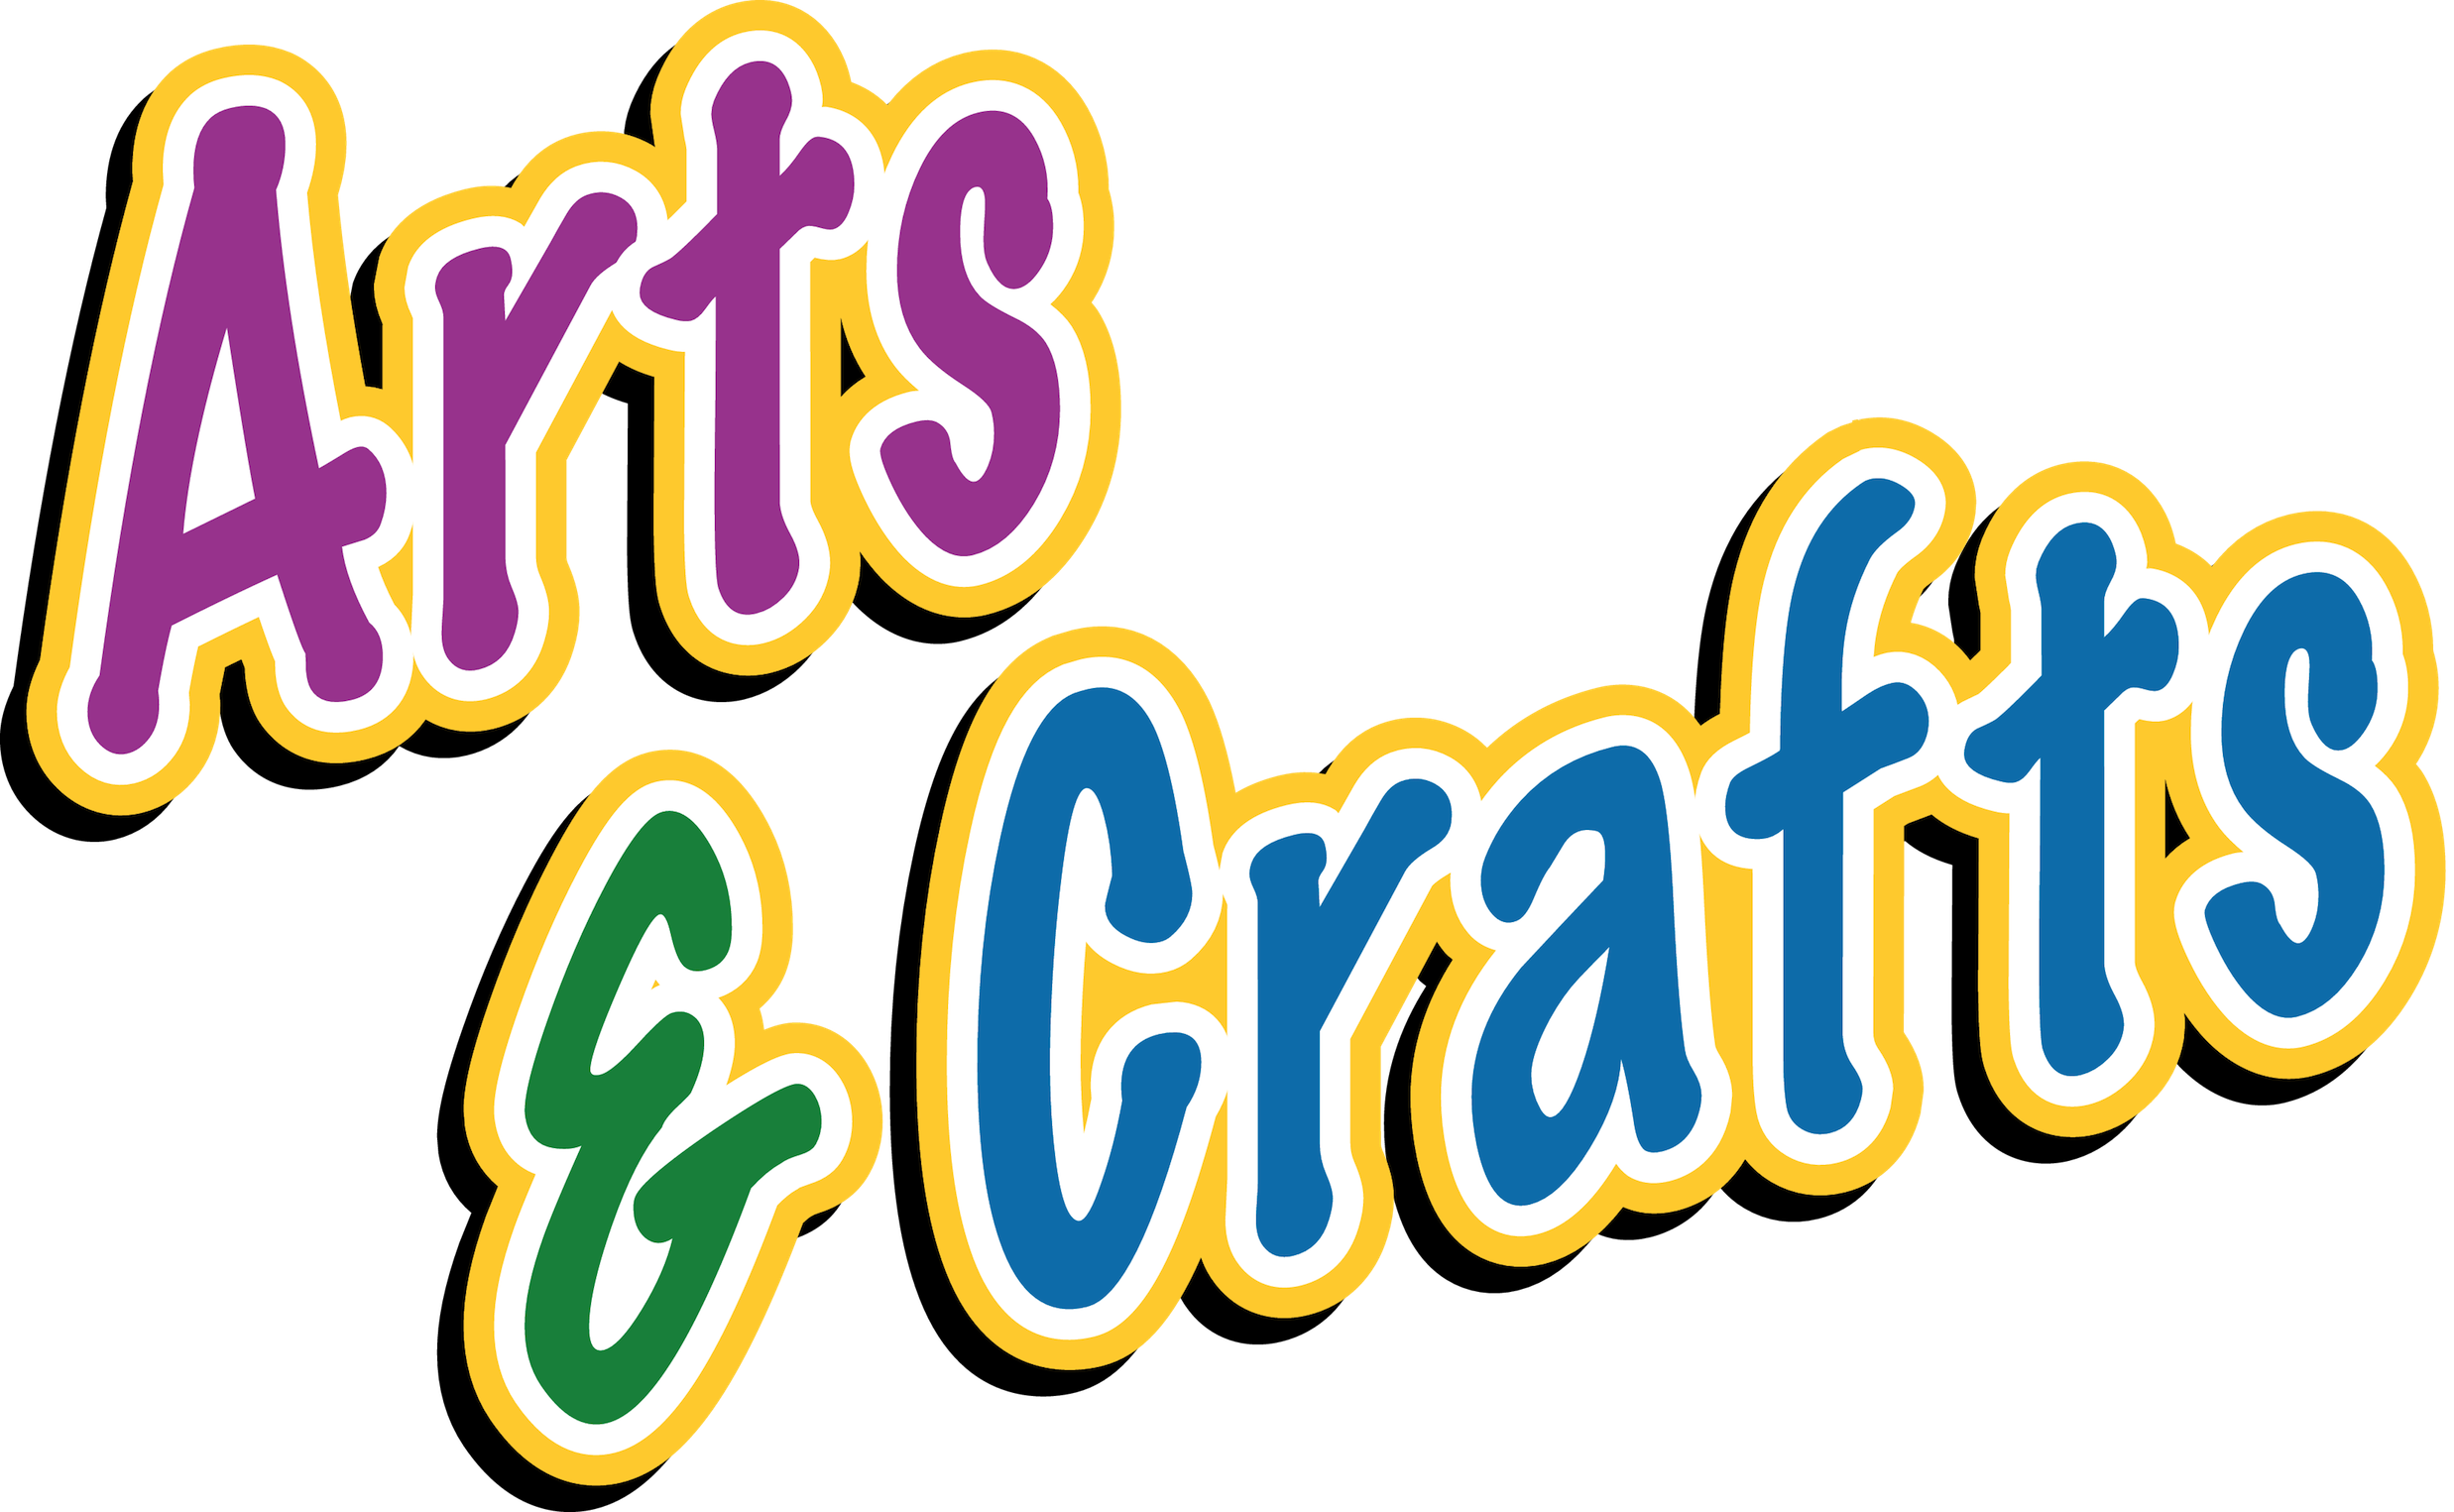 Arts and craft show clip art clipart